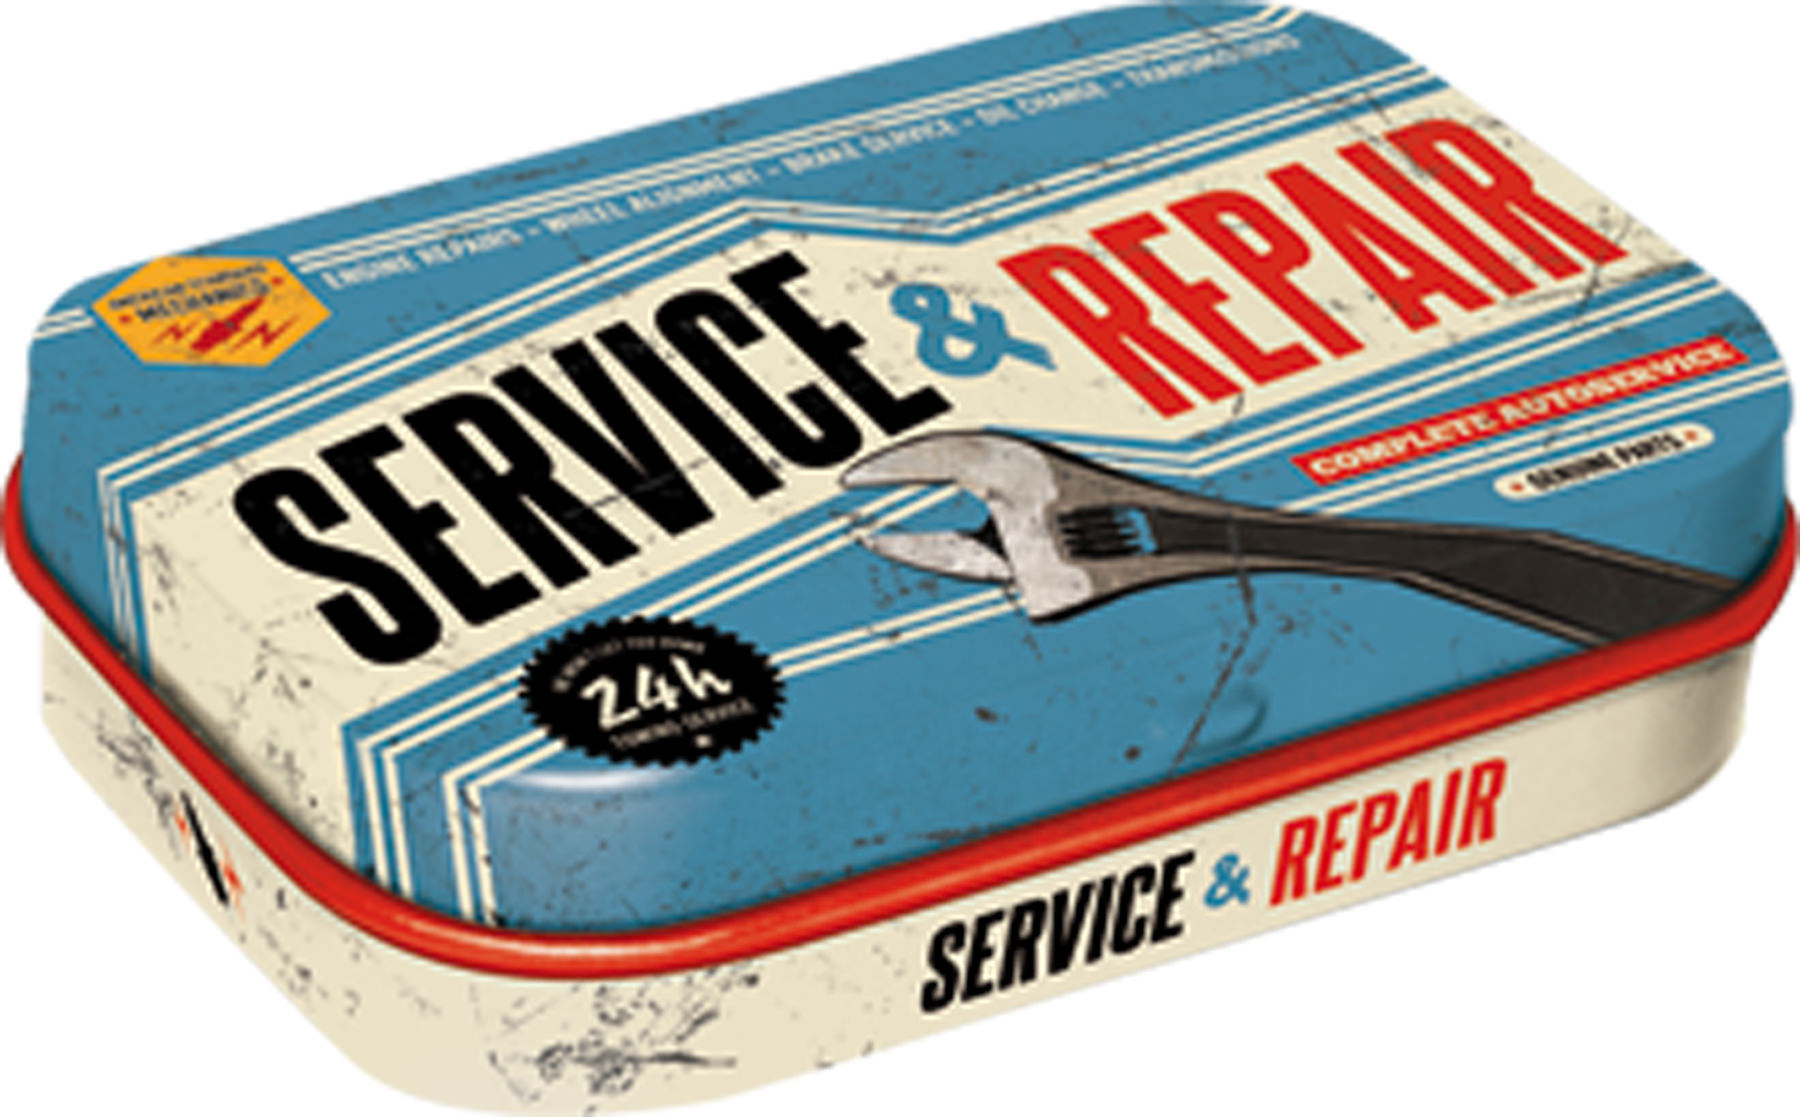 Krabička na pilulky "Service & Repair"